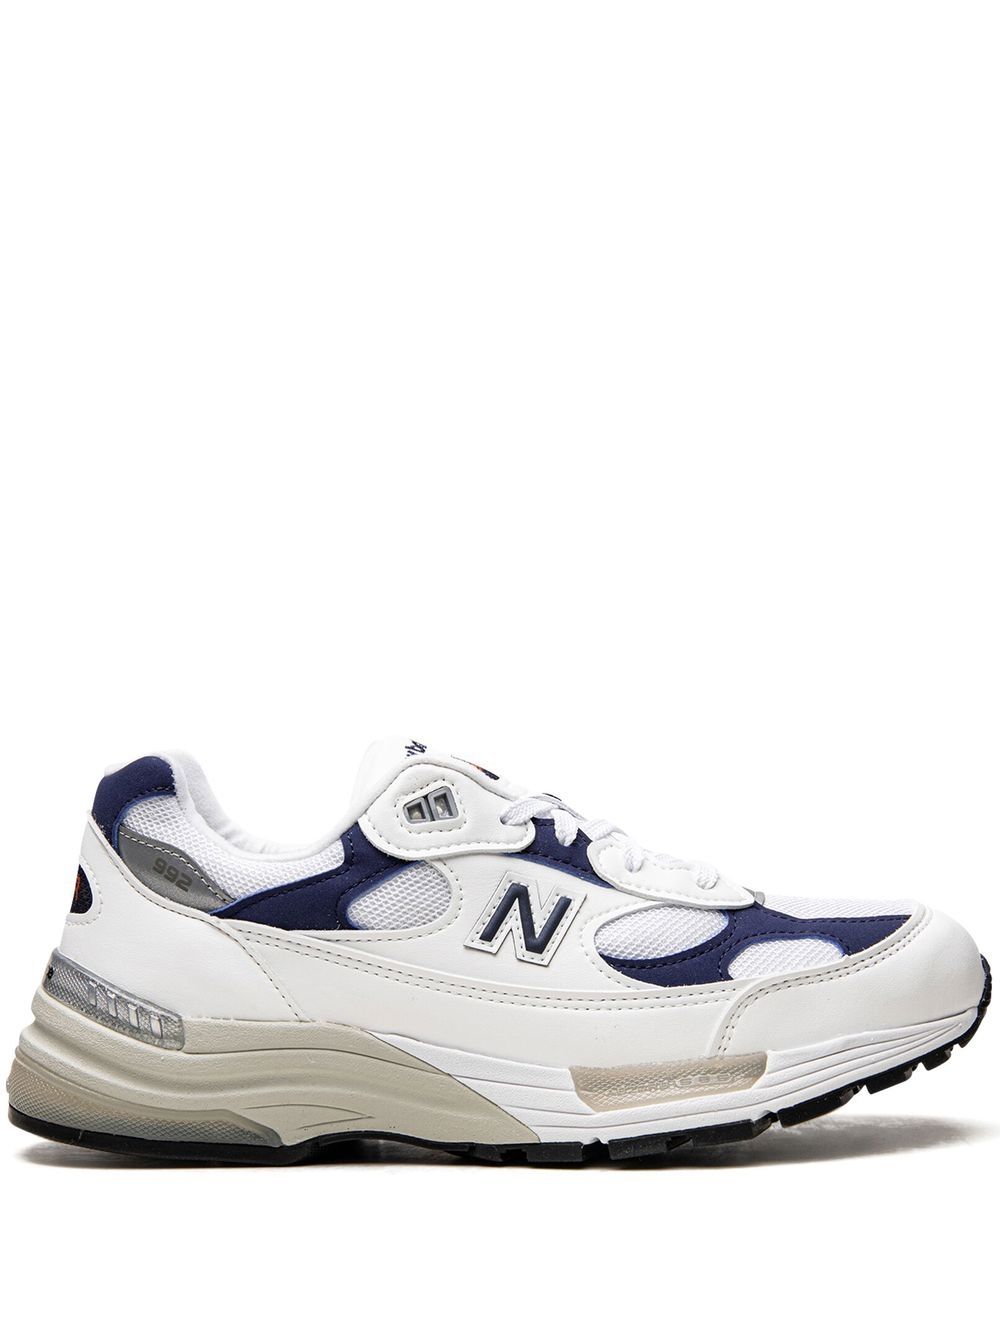 New Balance 992 "White/Navy" sneakers von New Balance